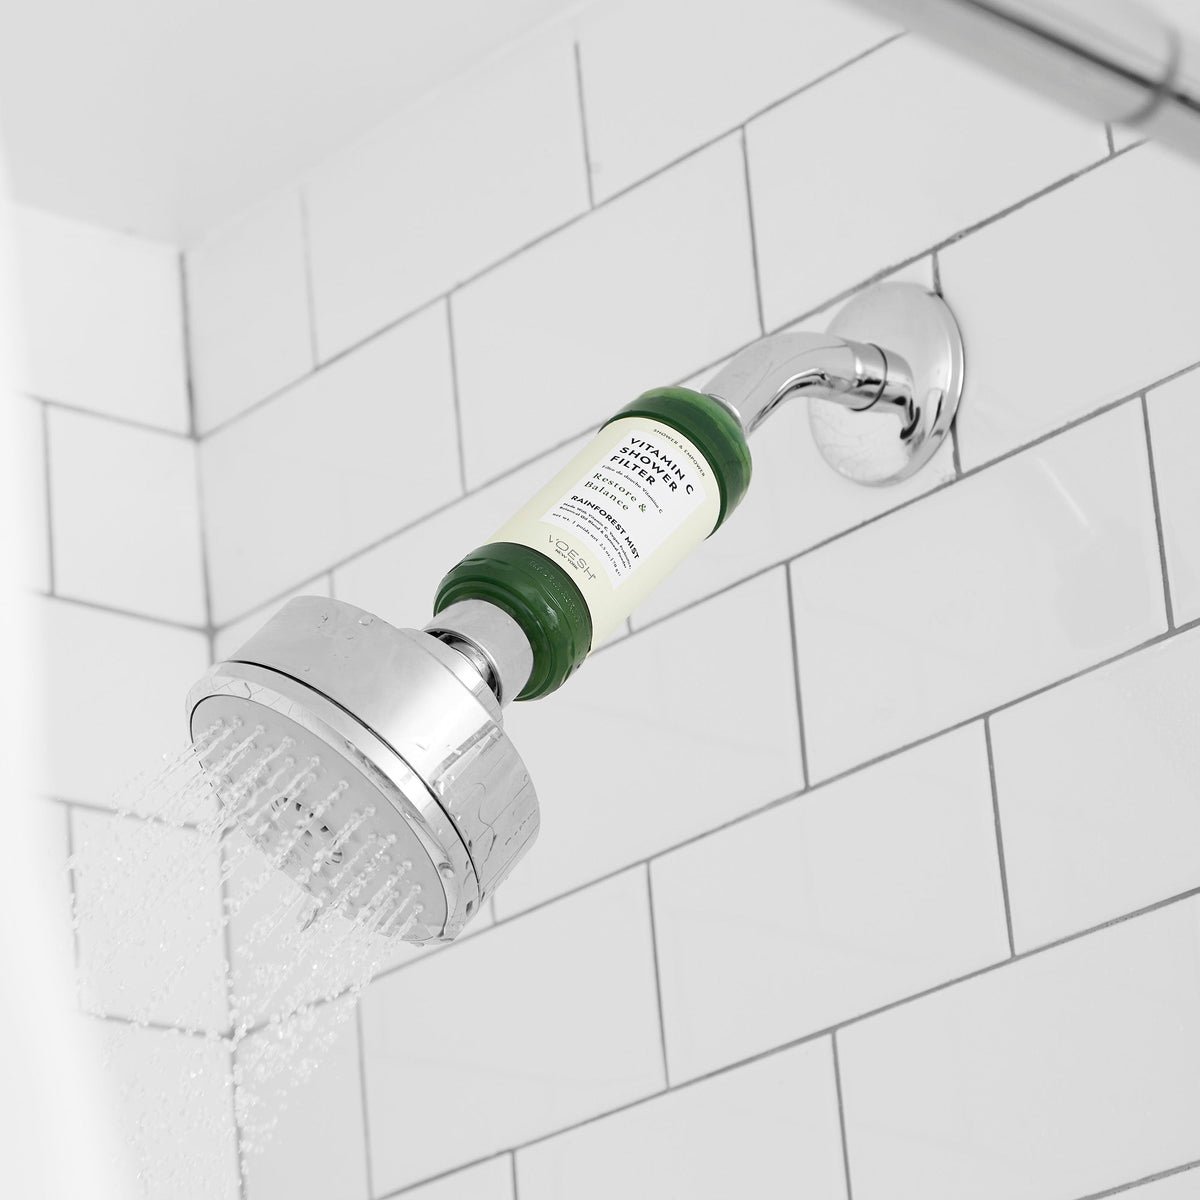 Shower filter installed in the shower